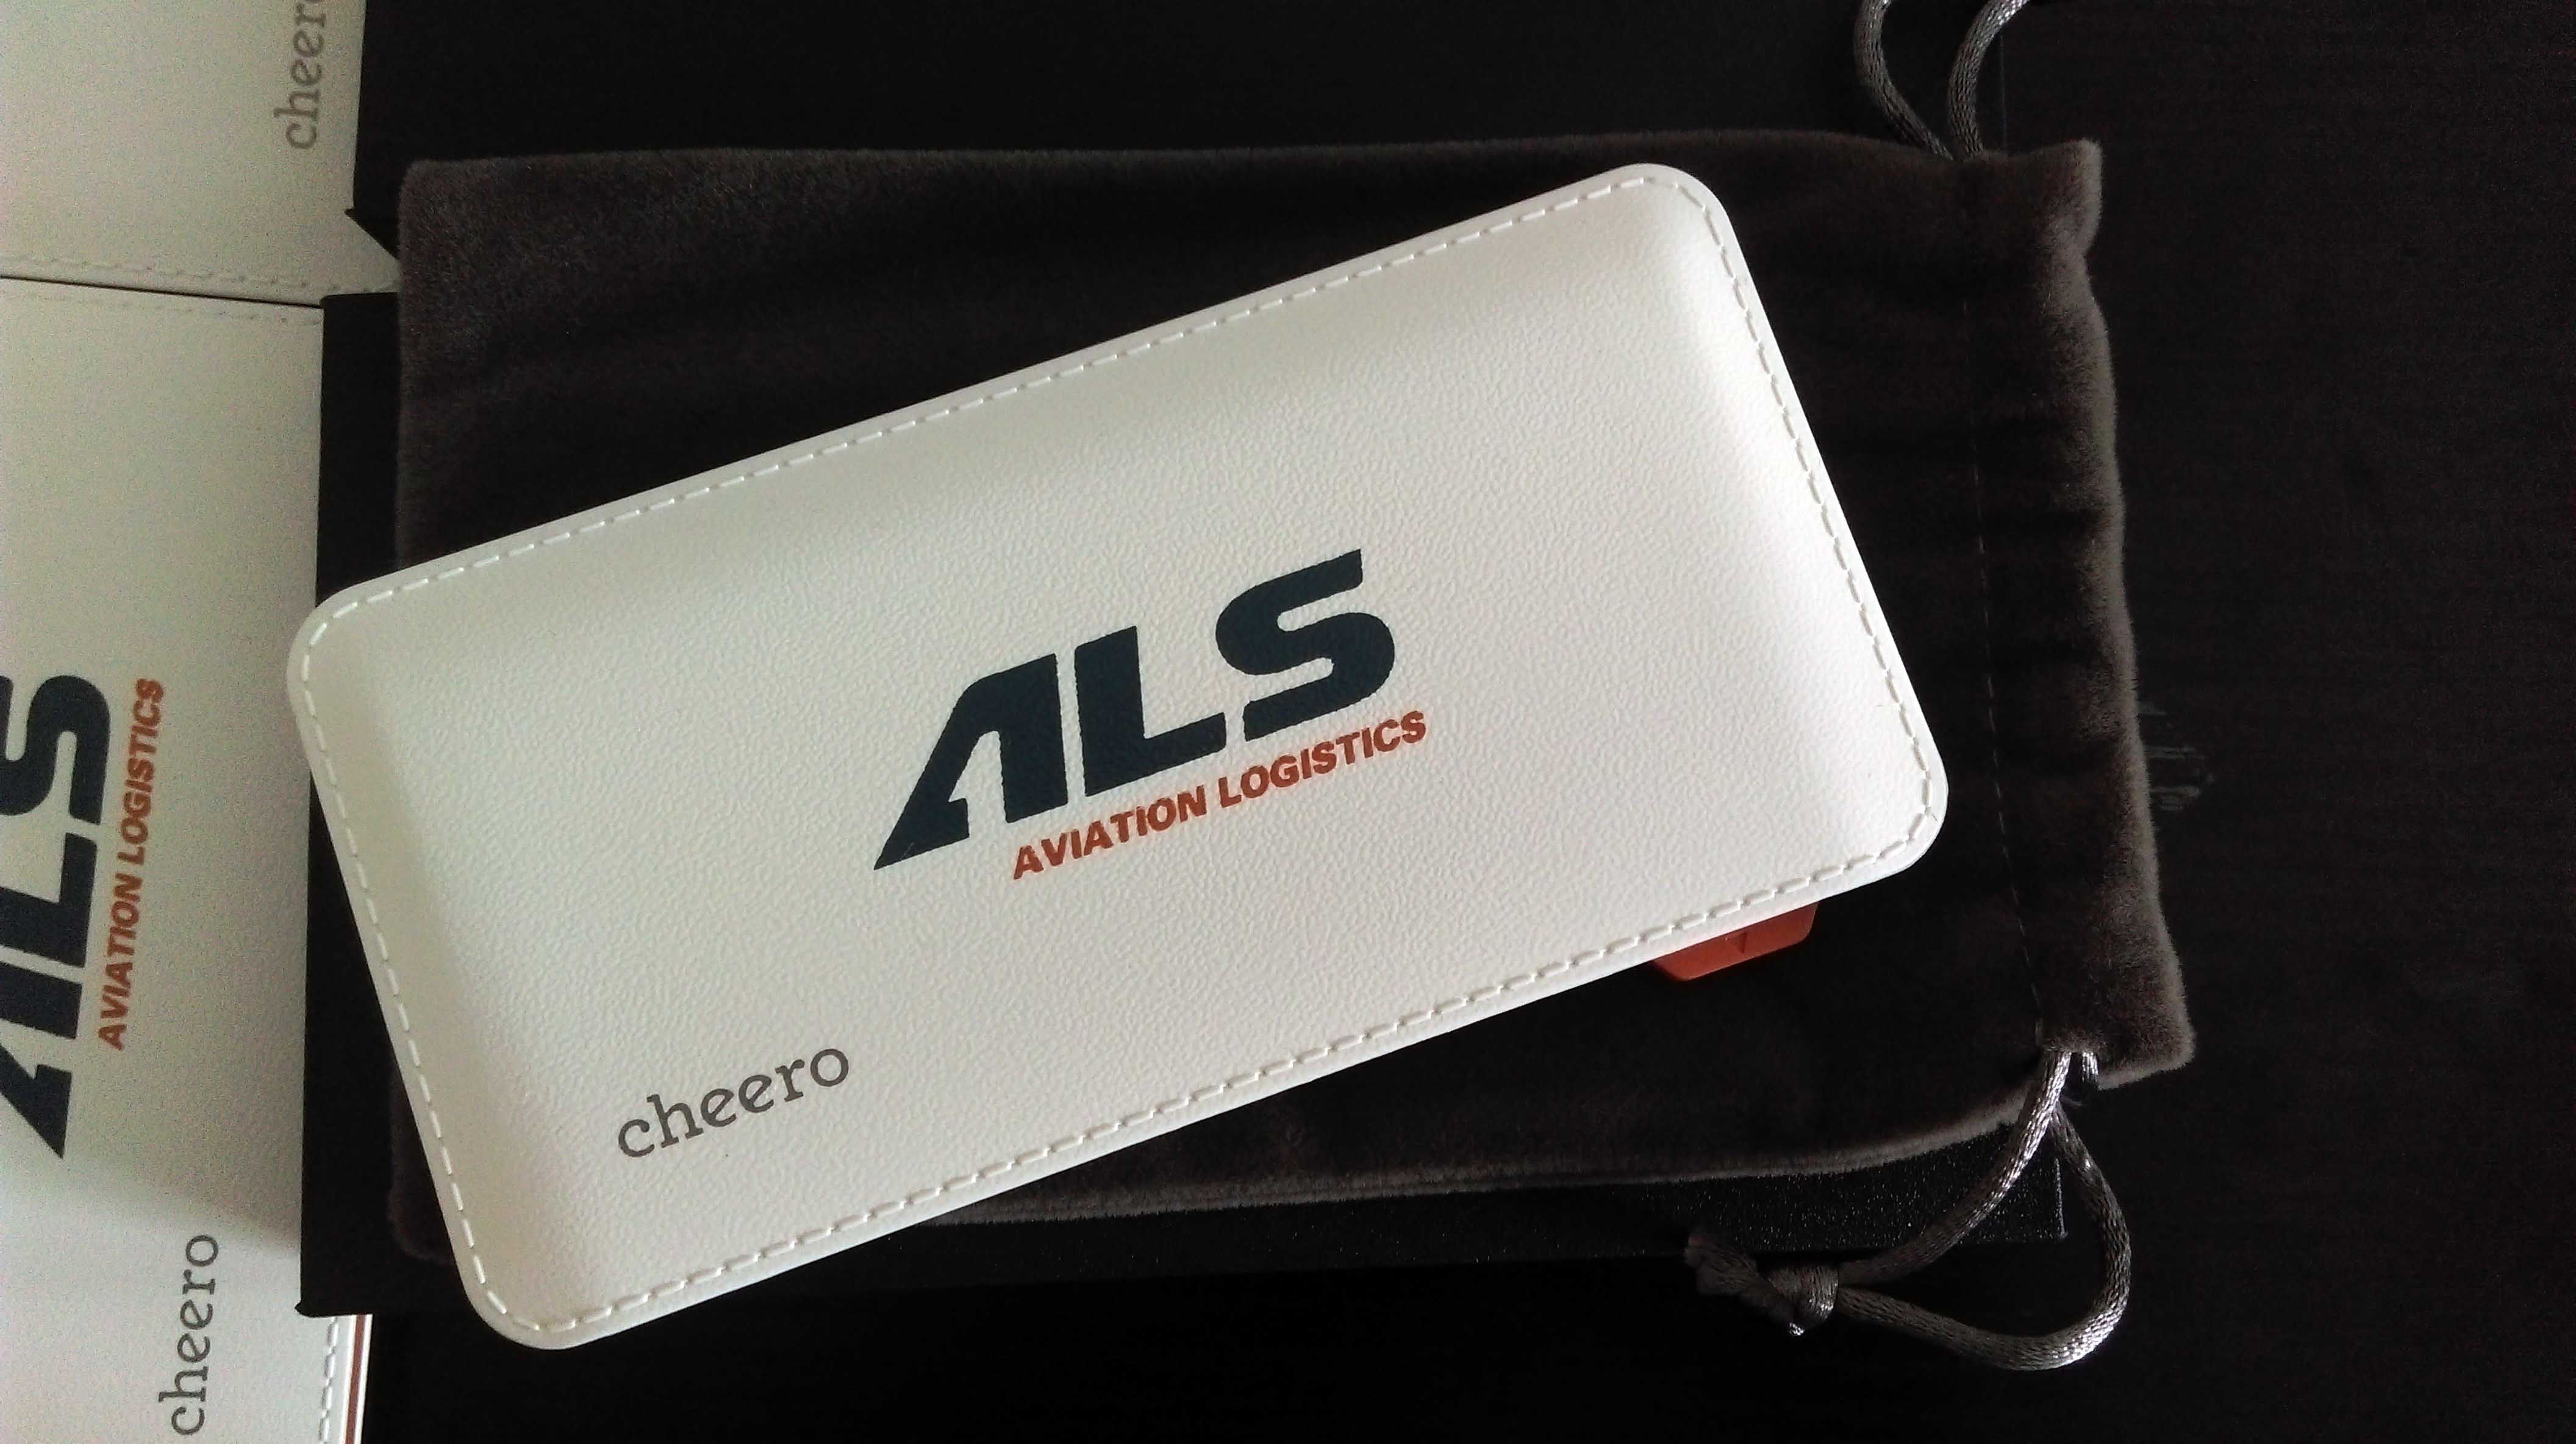 pin sac du phong cherro handy so luong lon ALS Vietnam